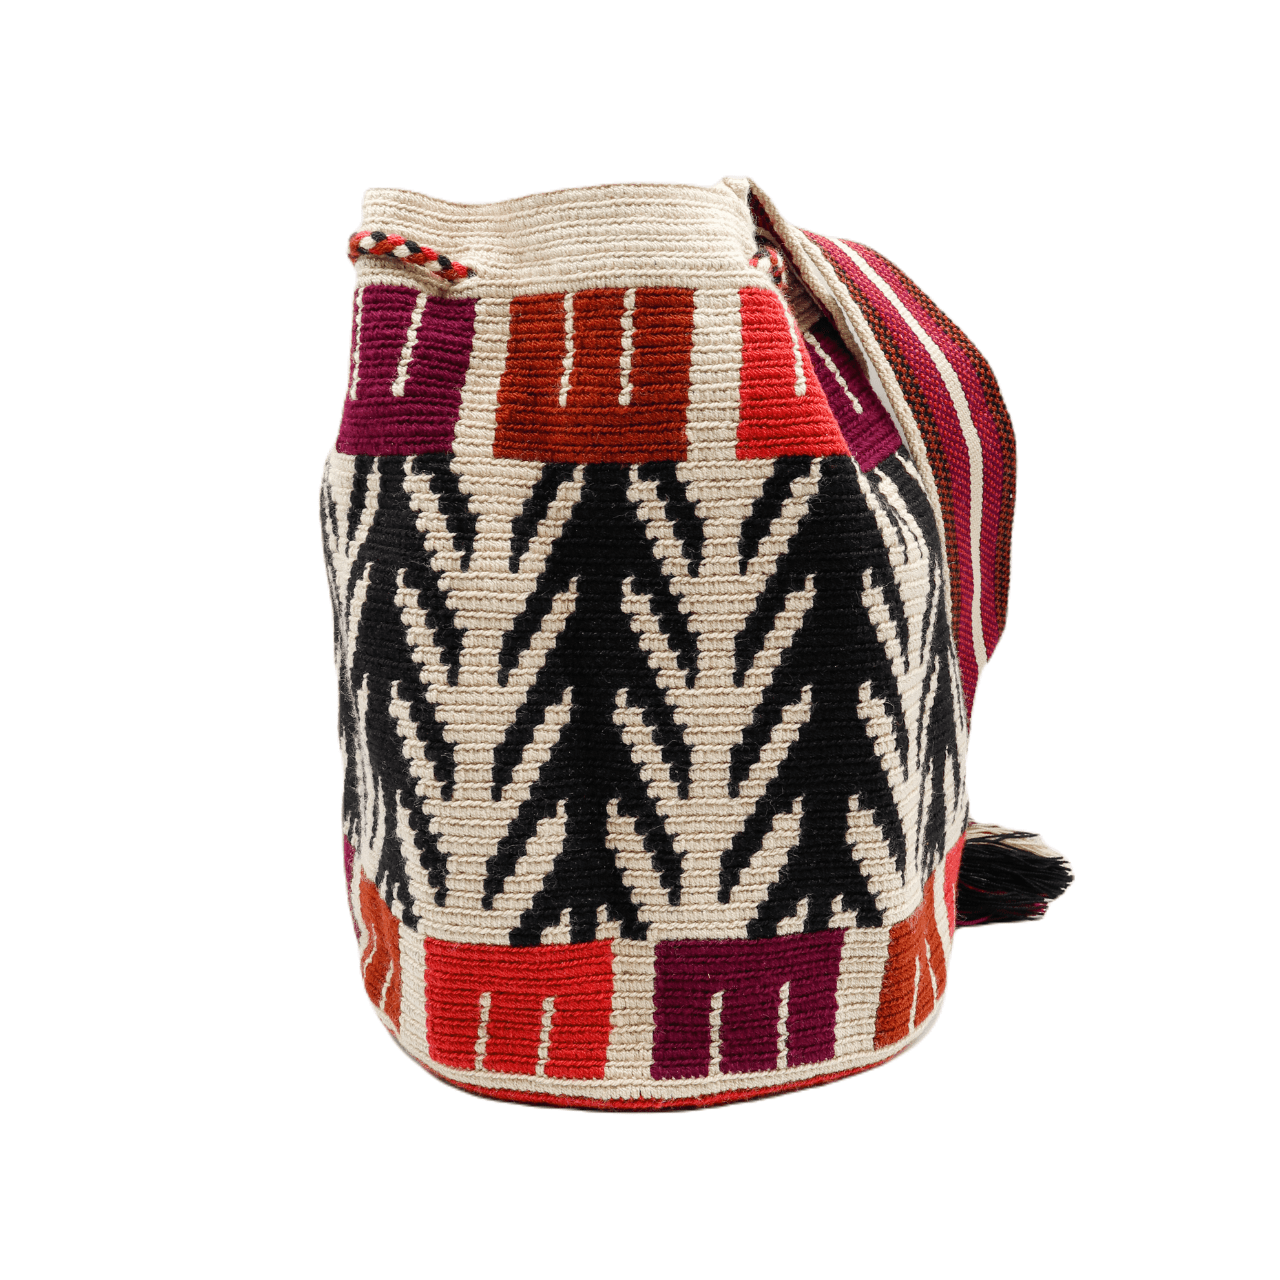 Sami Wayuu Bag in Beige, Black, Rust, and Wine Colors